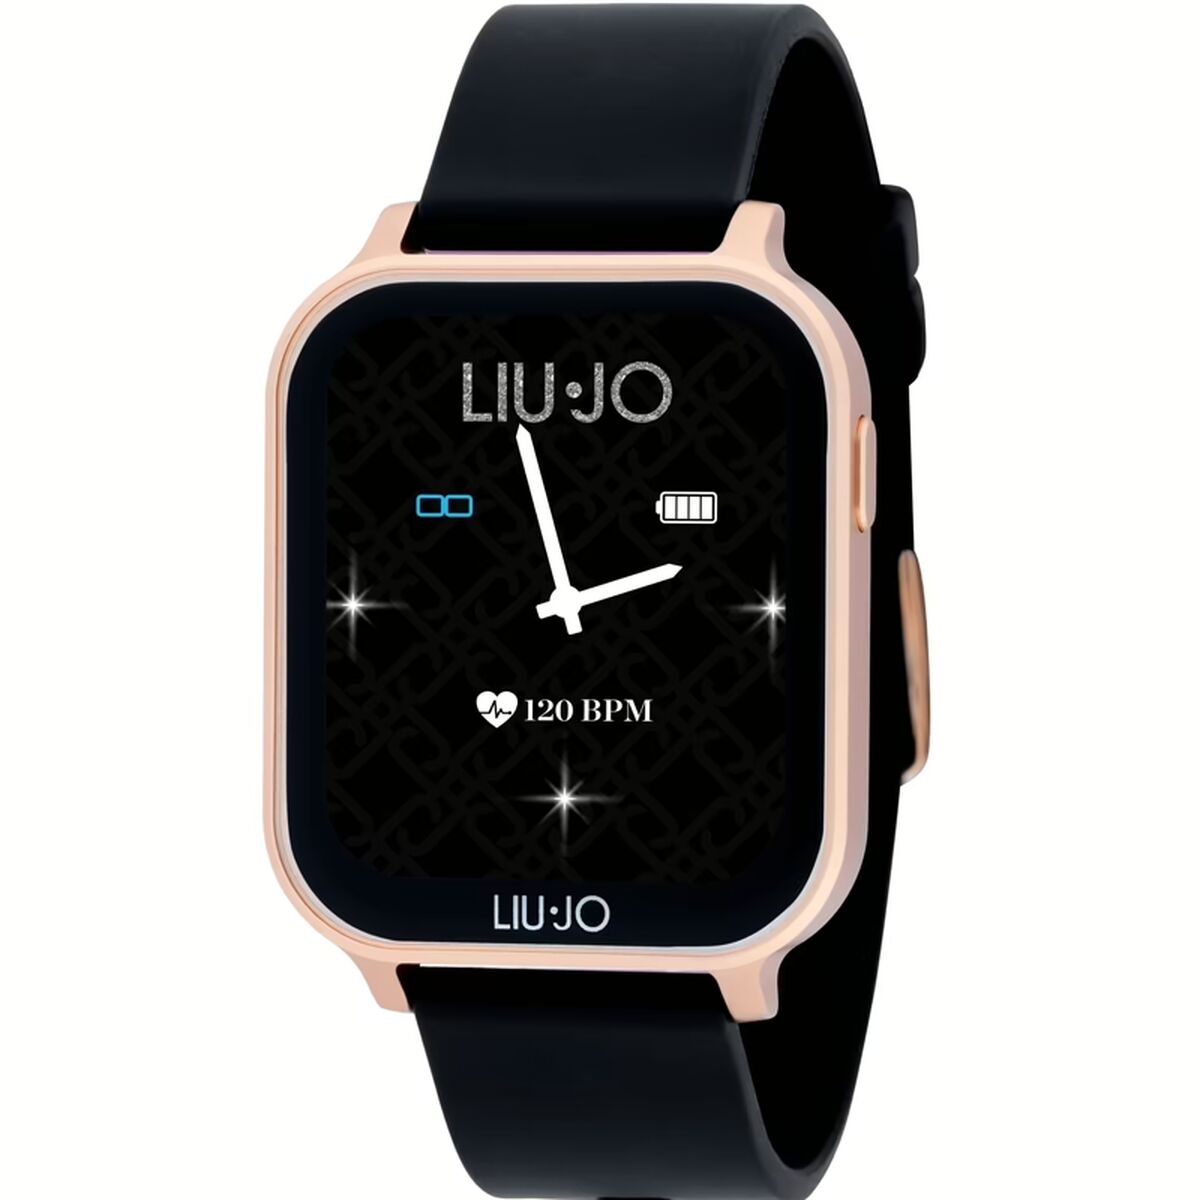 Kaufe Smartwatch LIU JO SWLJ119 bei AWK Flagship um € 145.00